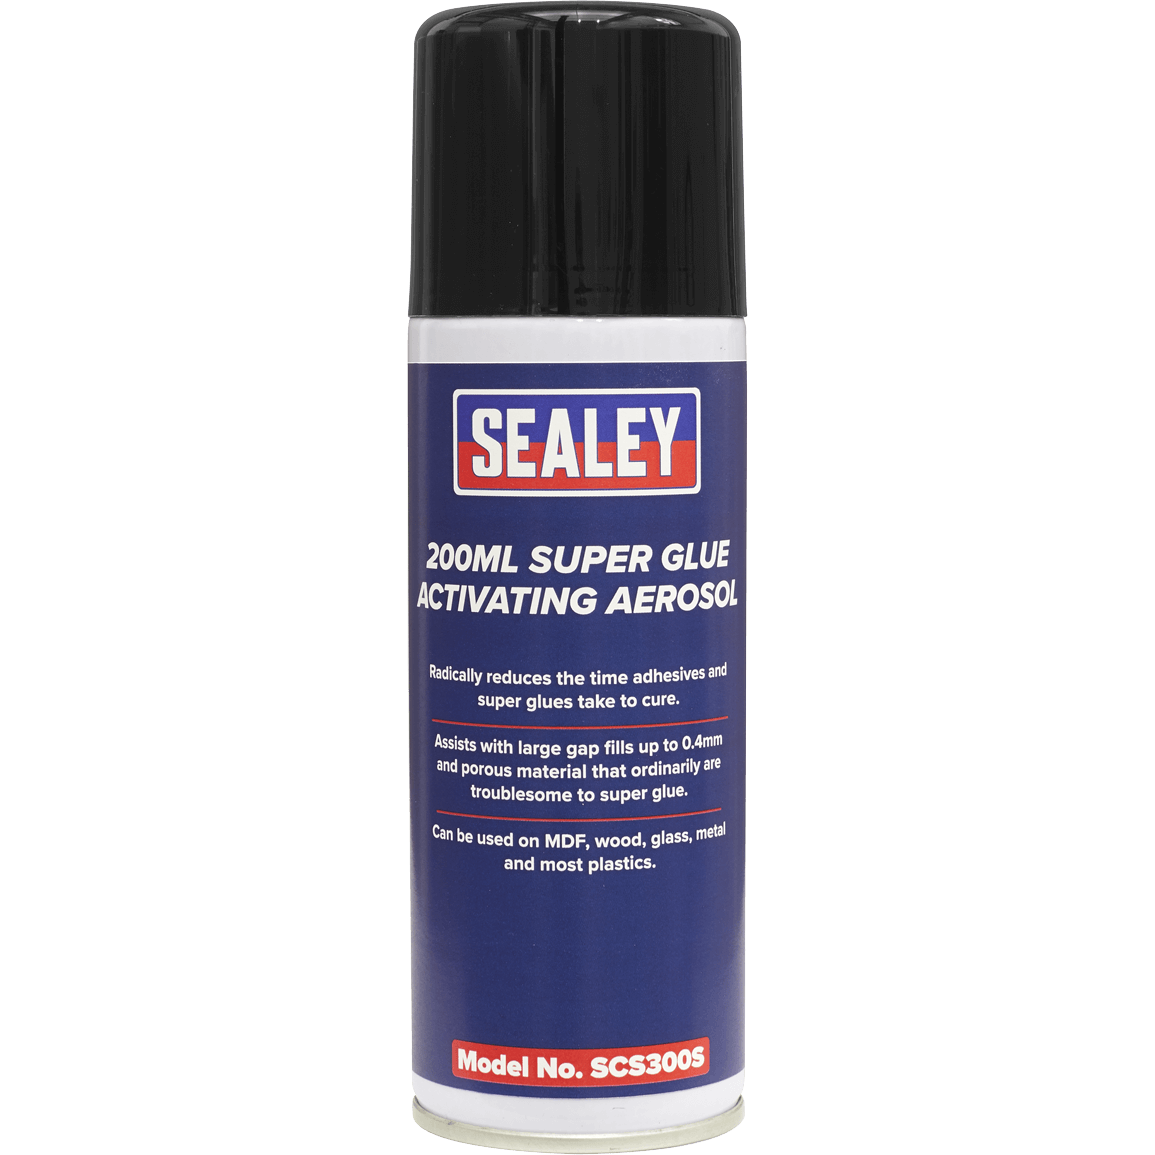 Sealey Super Glue Activating Aerosol Spray 200ml Pack of 1